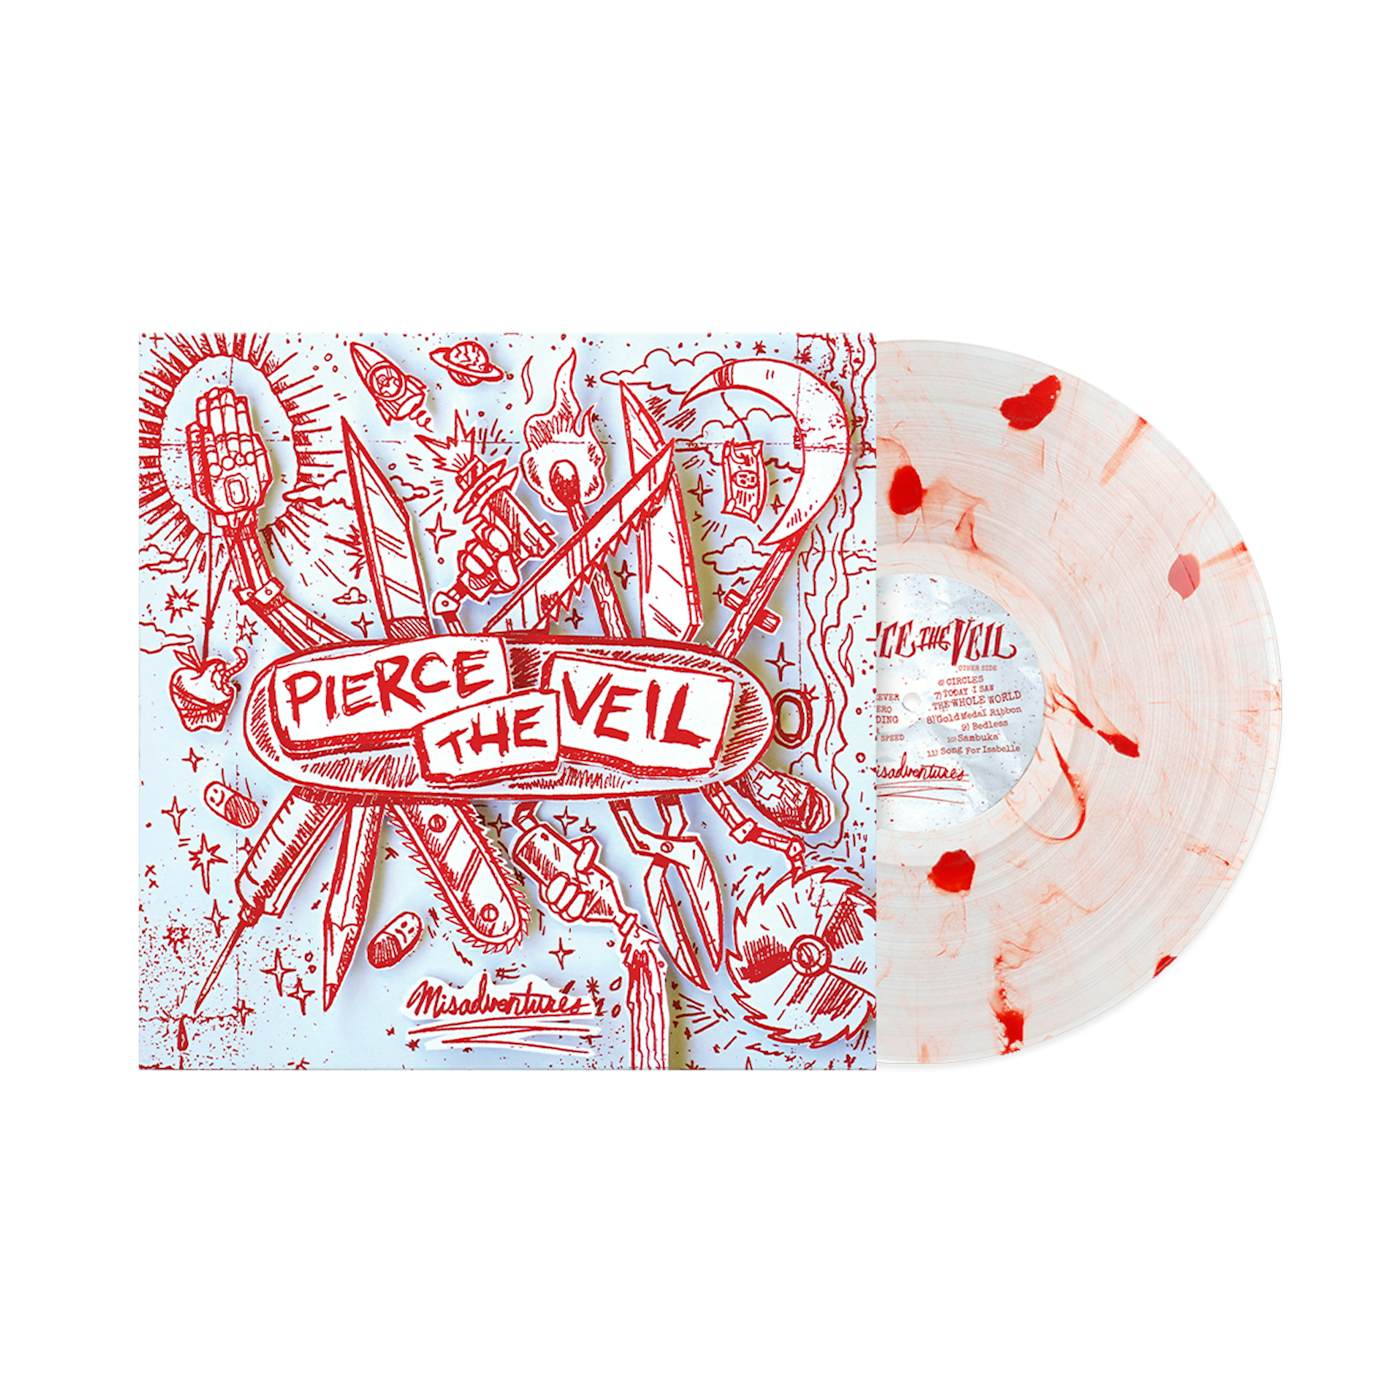 Pierce The Veil "Misadventures" Clear w/ Red Blobs Vinyl